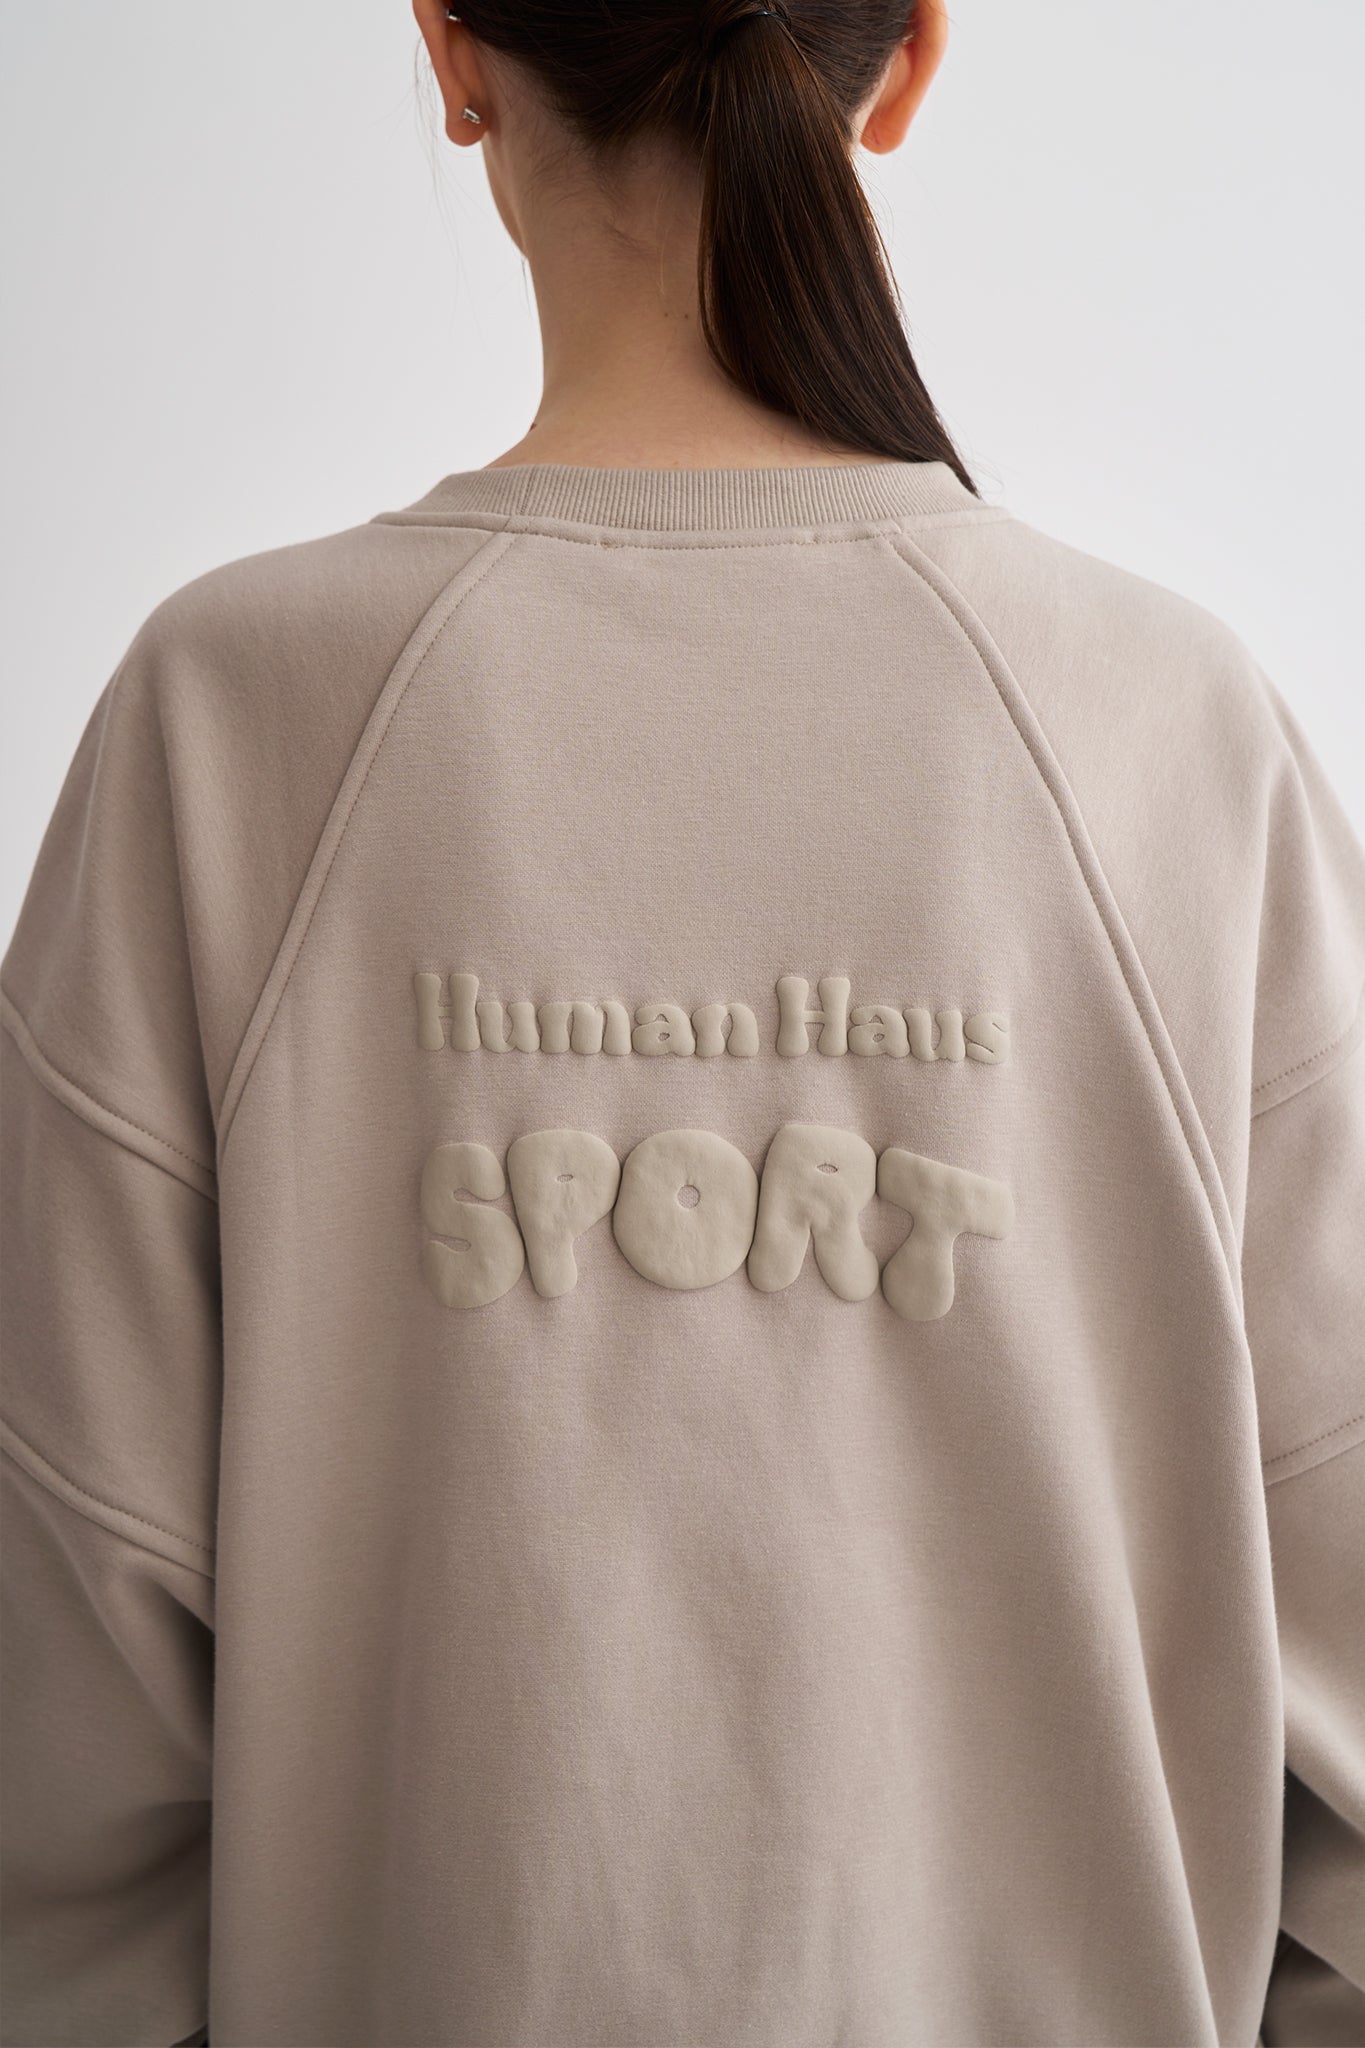 HH Sport Sweatshirt